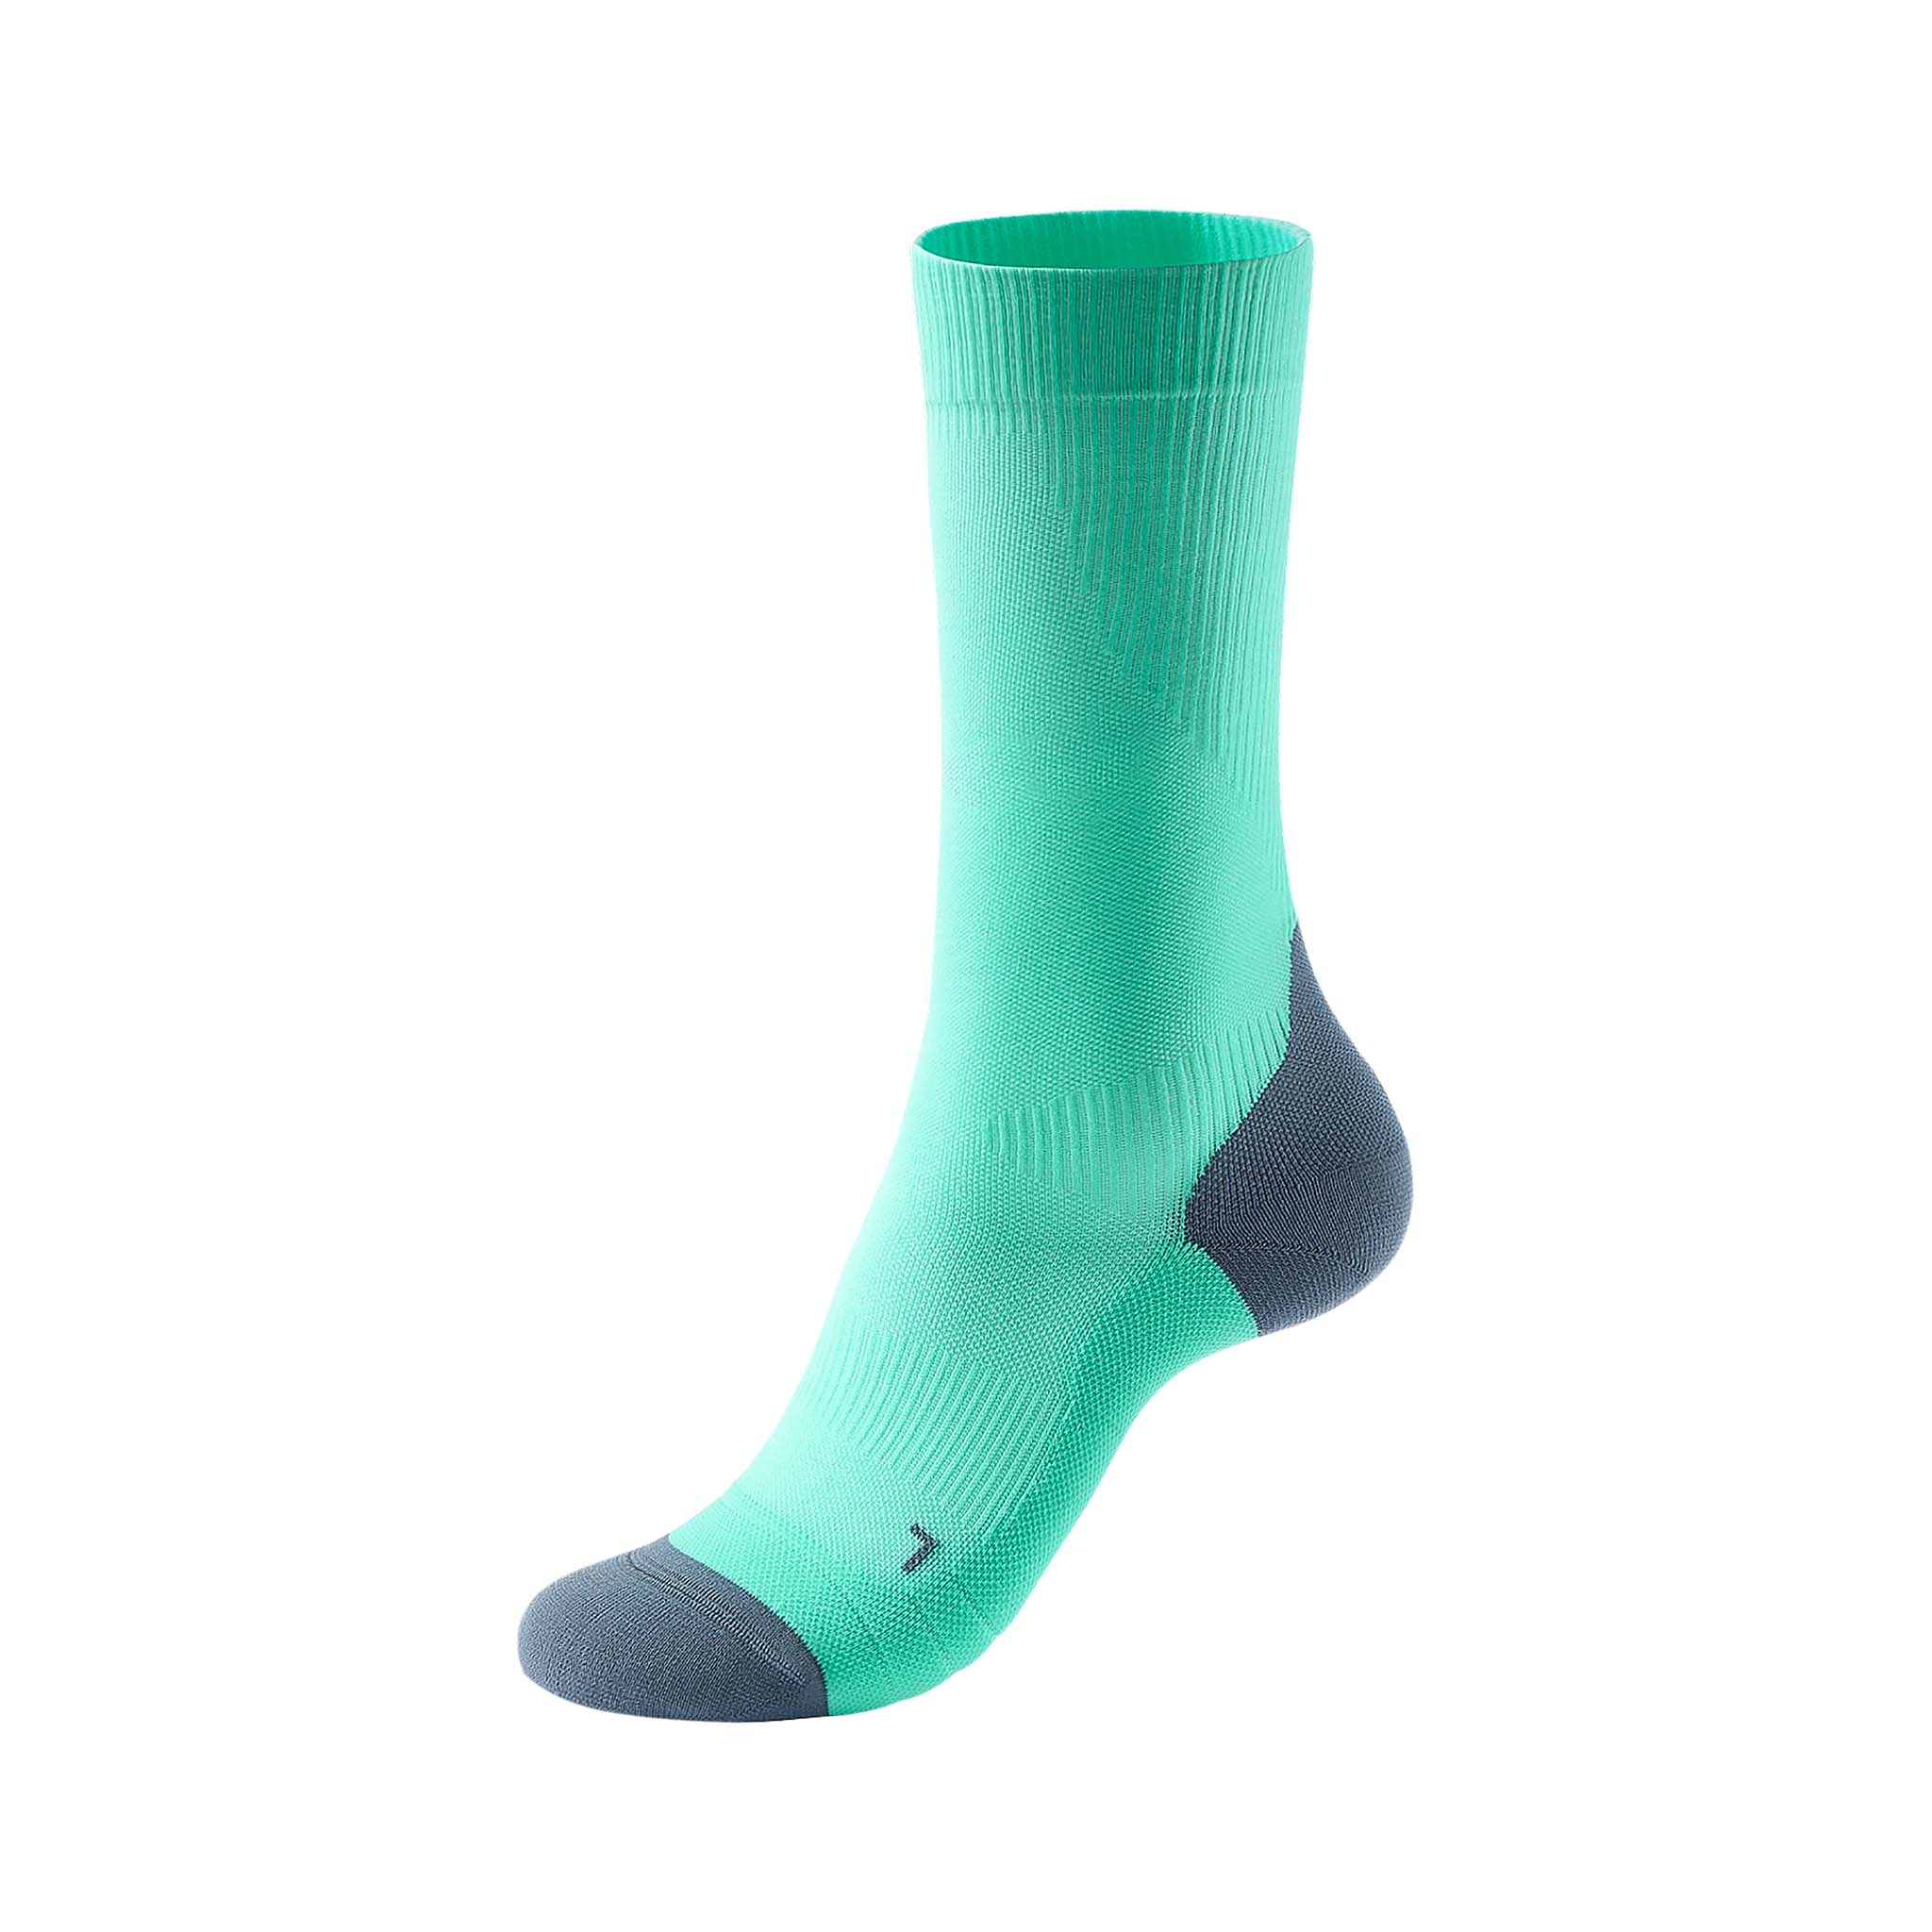 elastic men's socks 